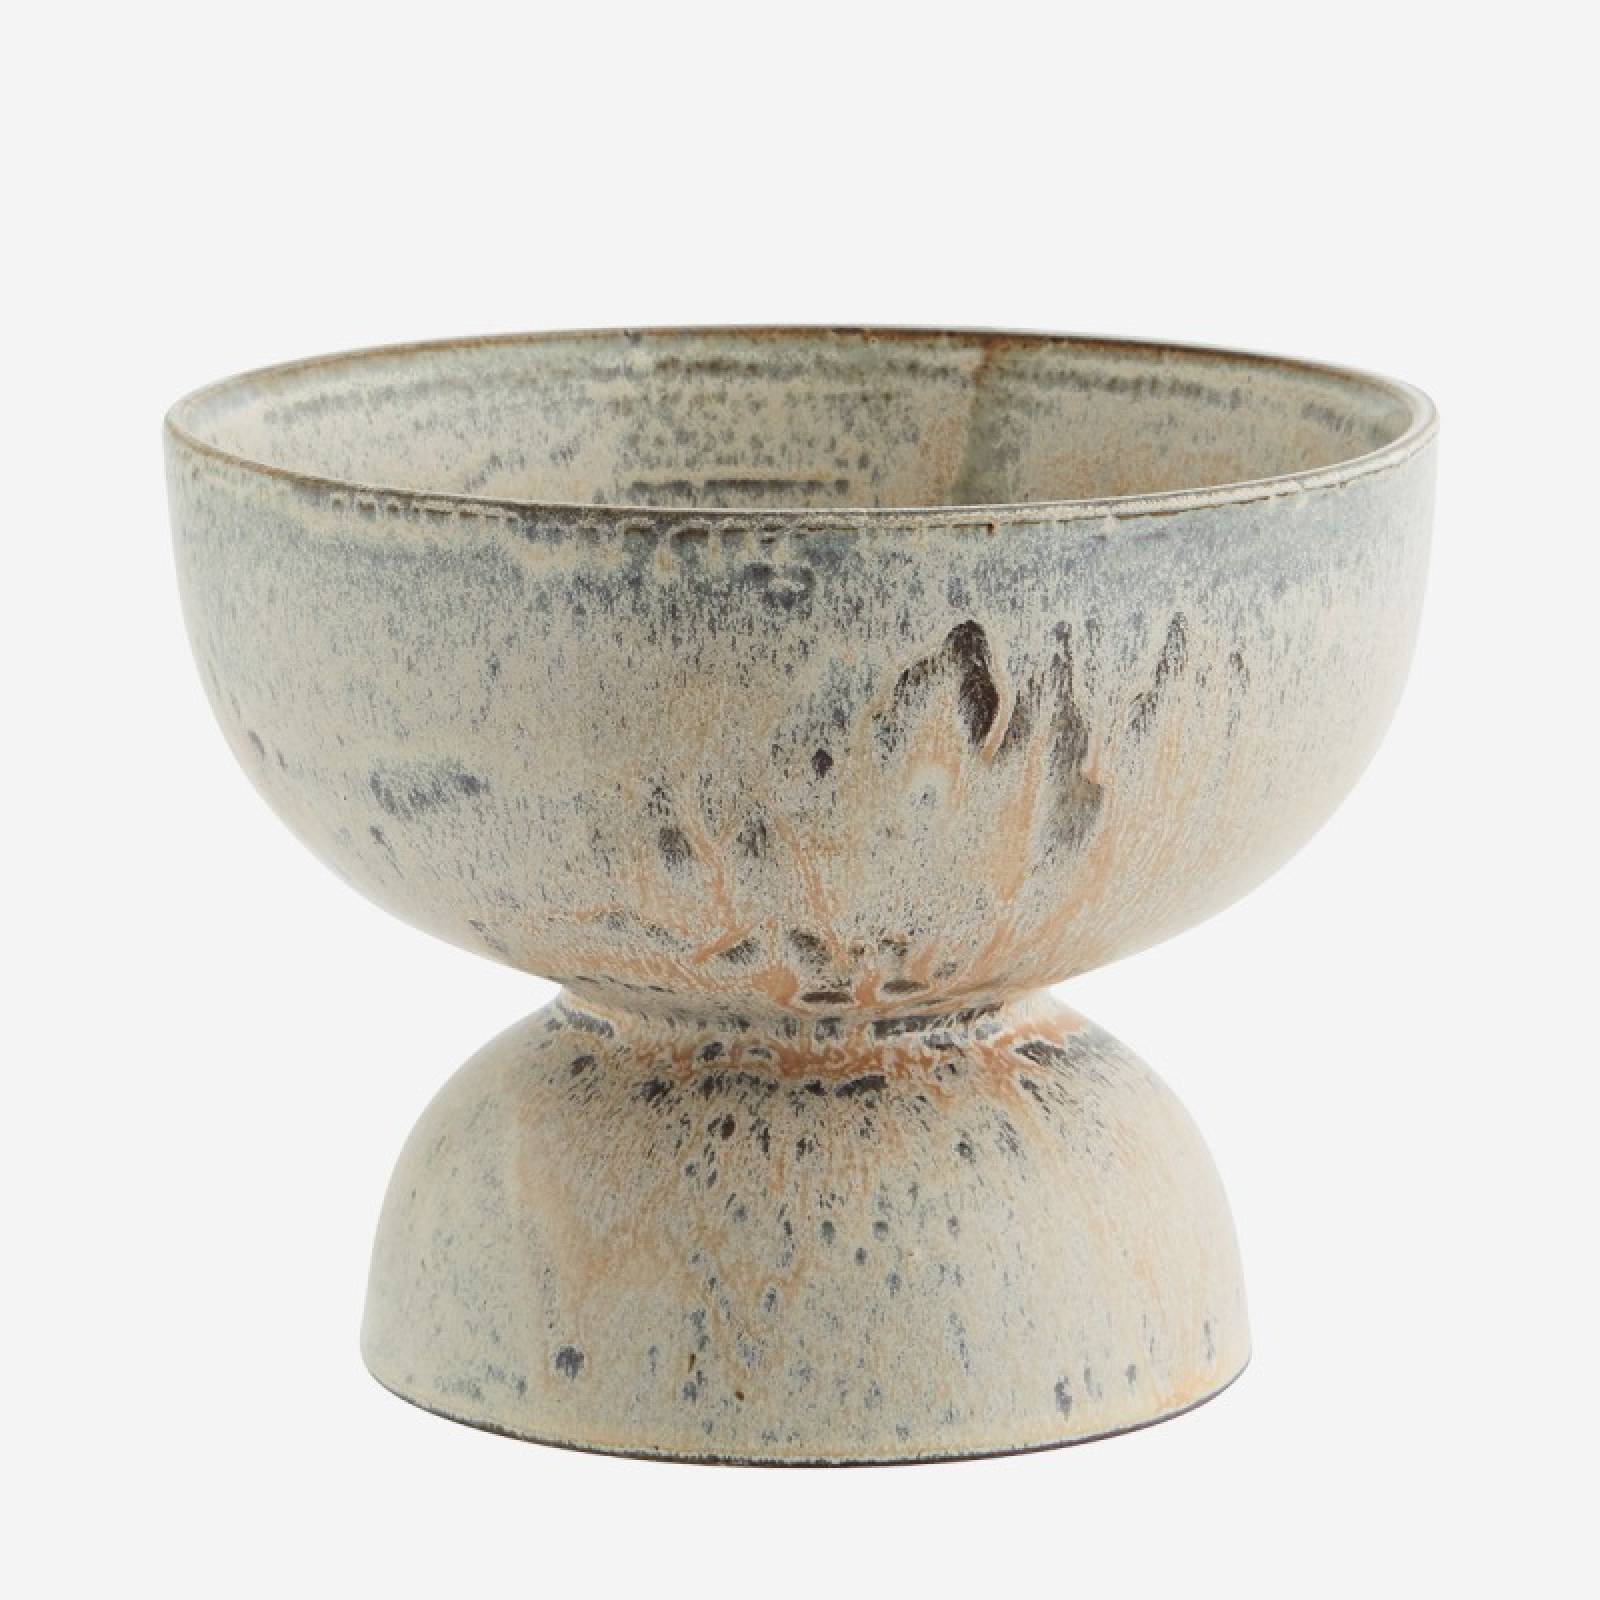 Bowl Shaped Flower Pot On Plinth In Grey & White H:14.5cm thumbnails